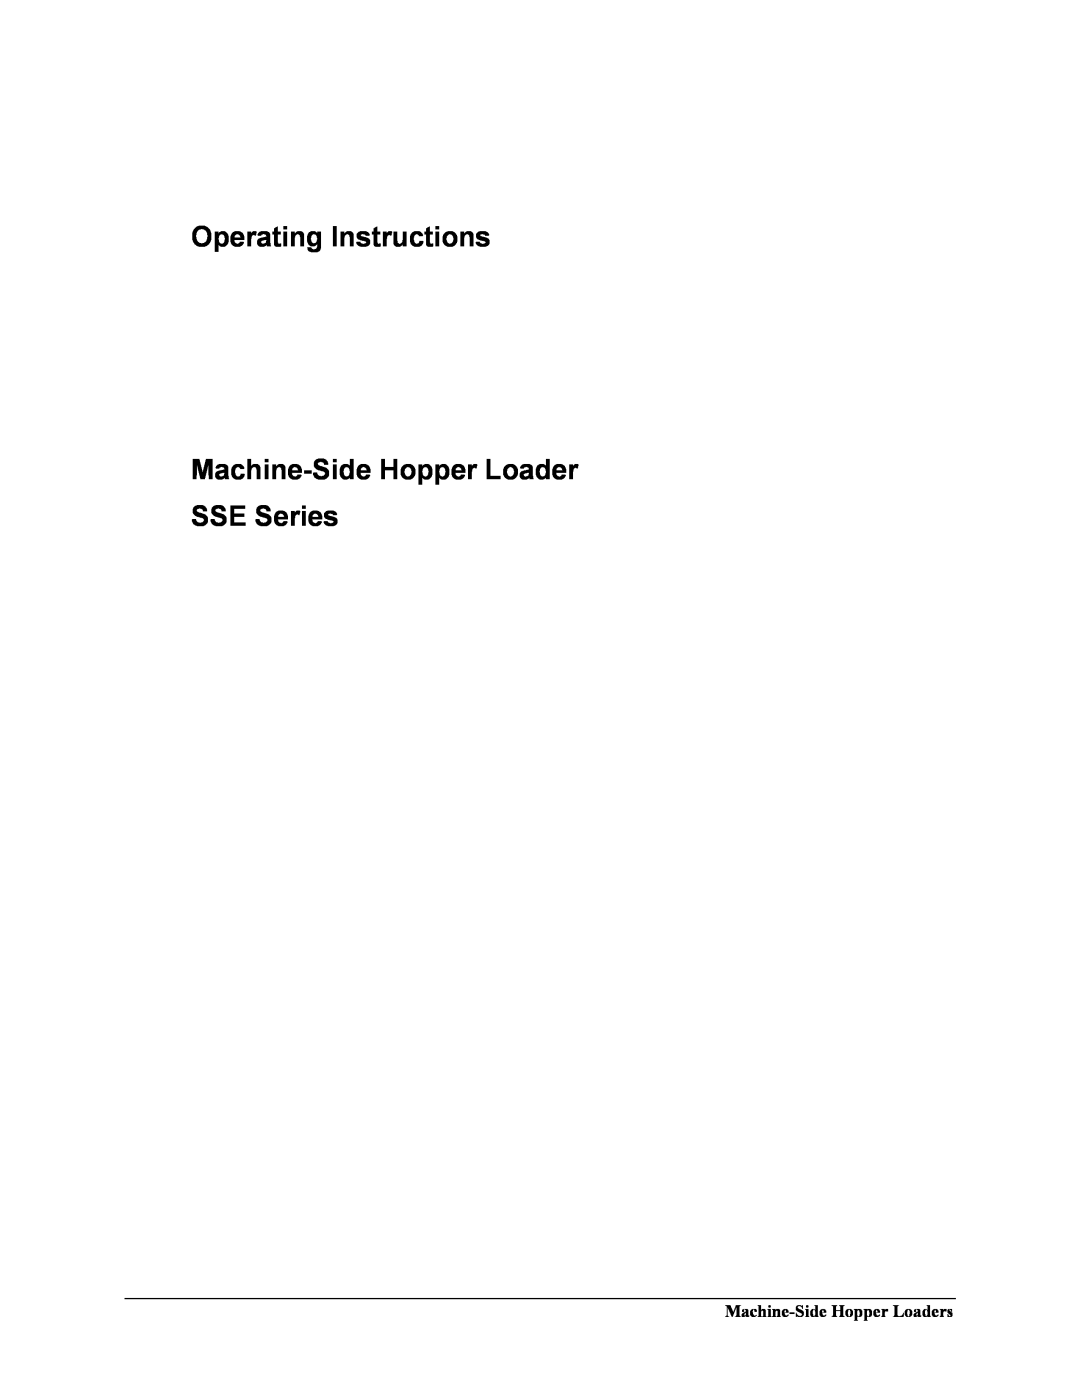 Sterling sse manual Operating Instructions, Machine-SideHopper Loader SSE Series, Machine-SideHopper Loaders 